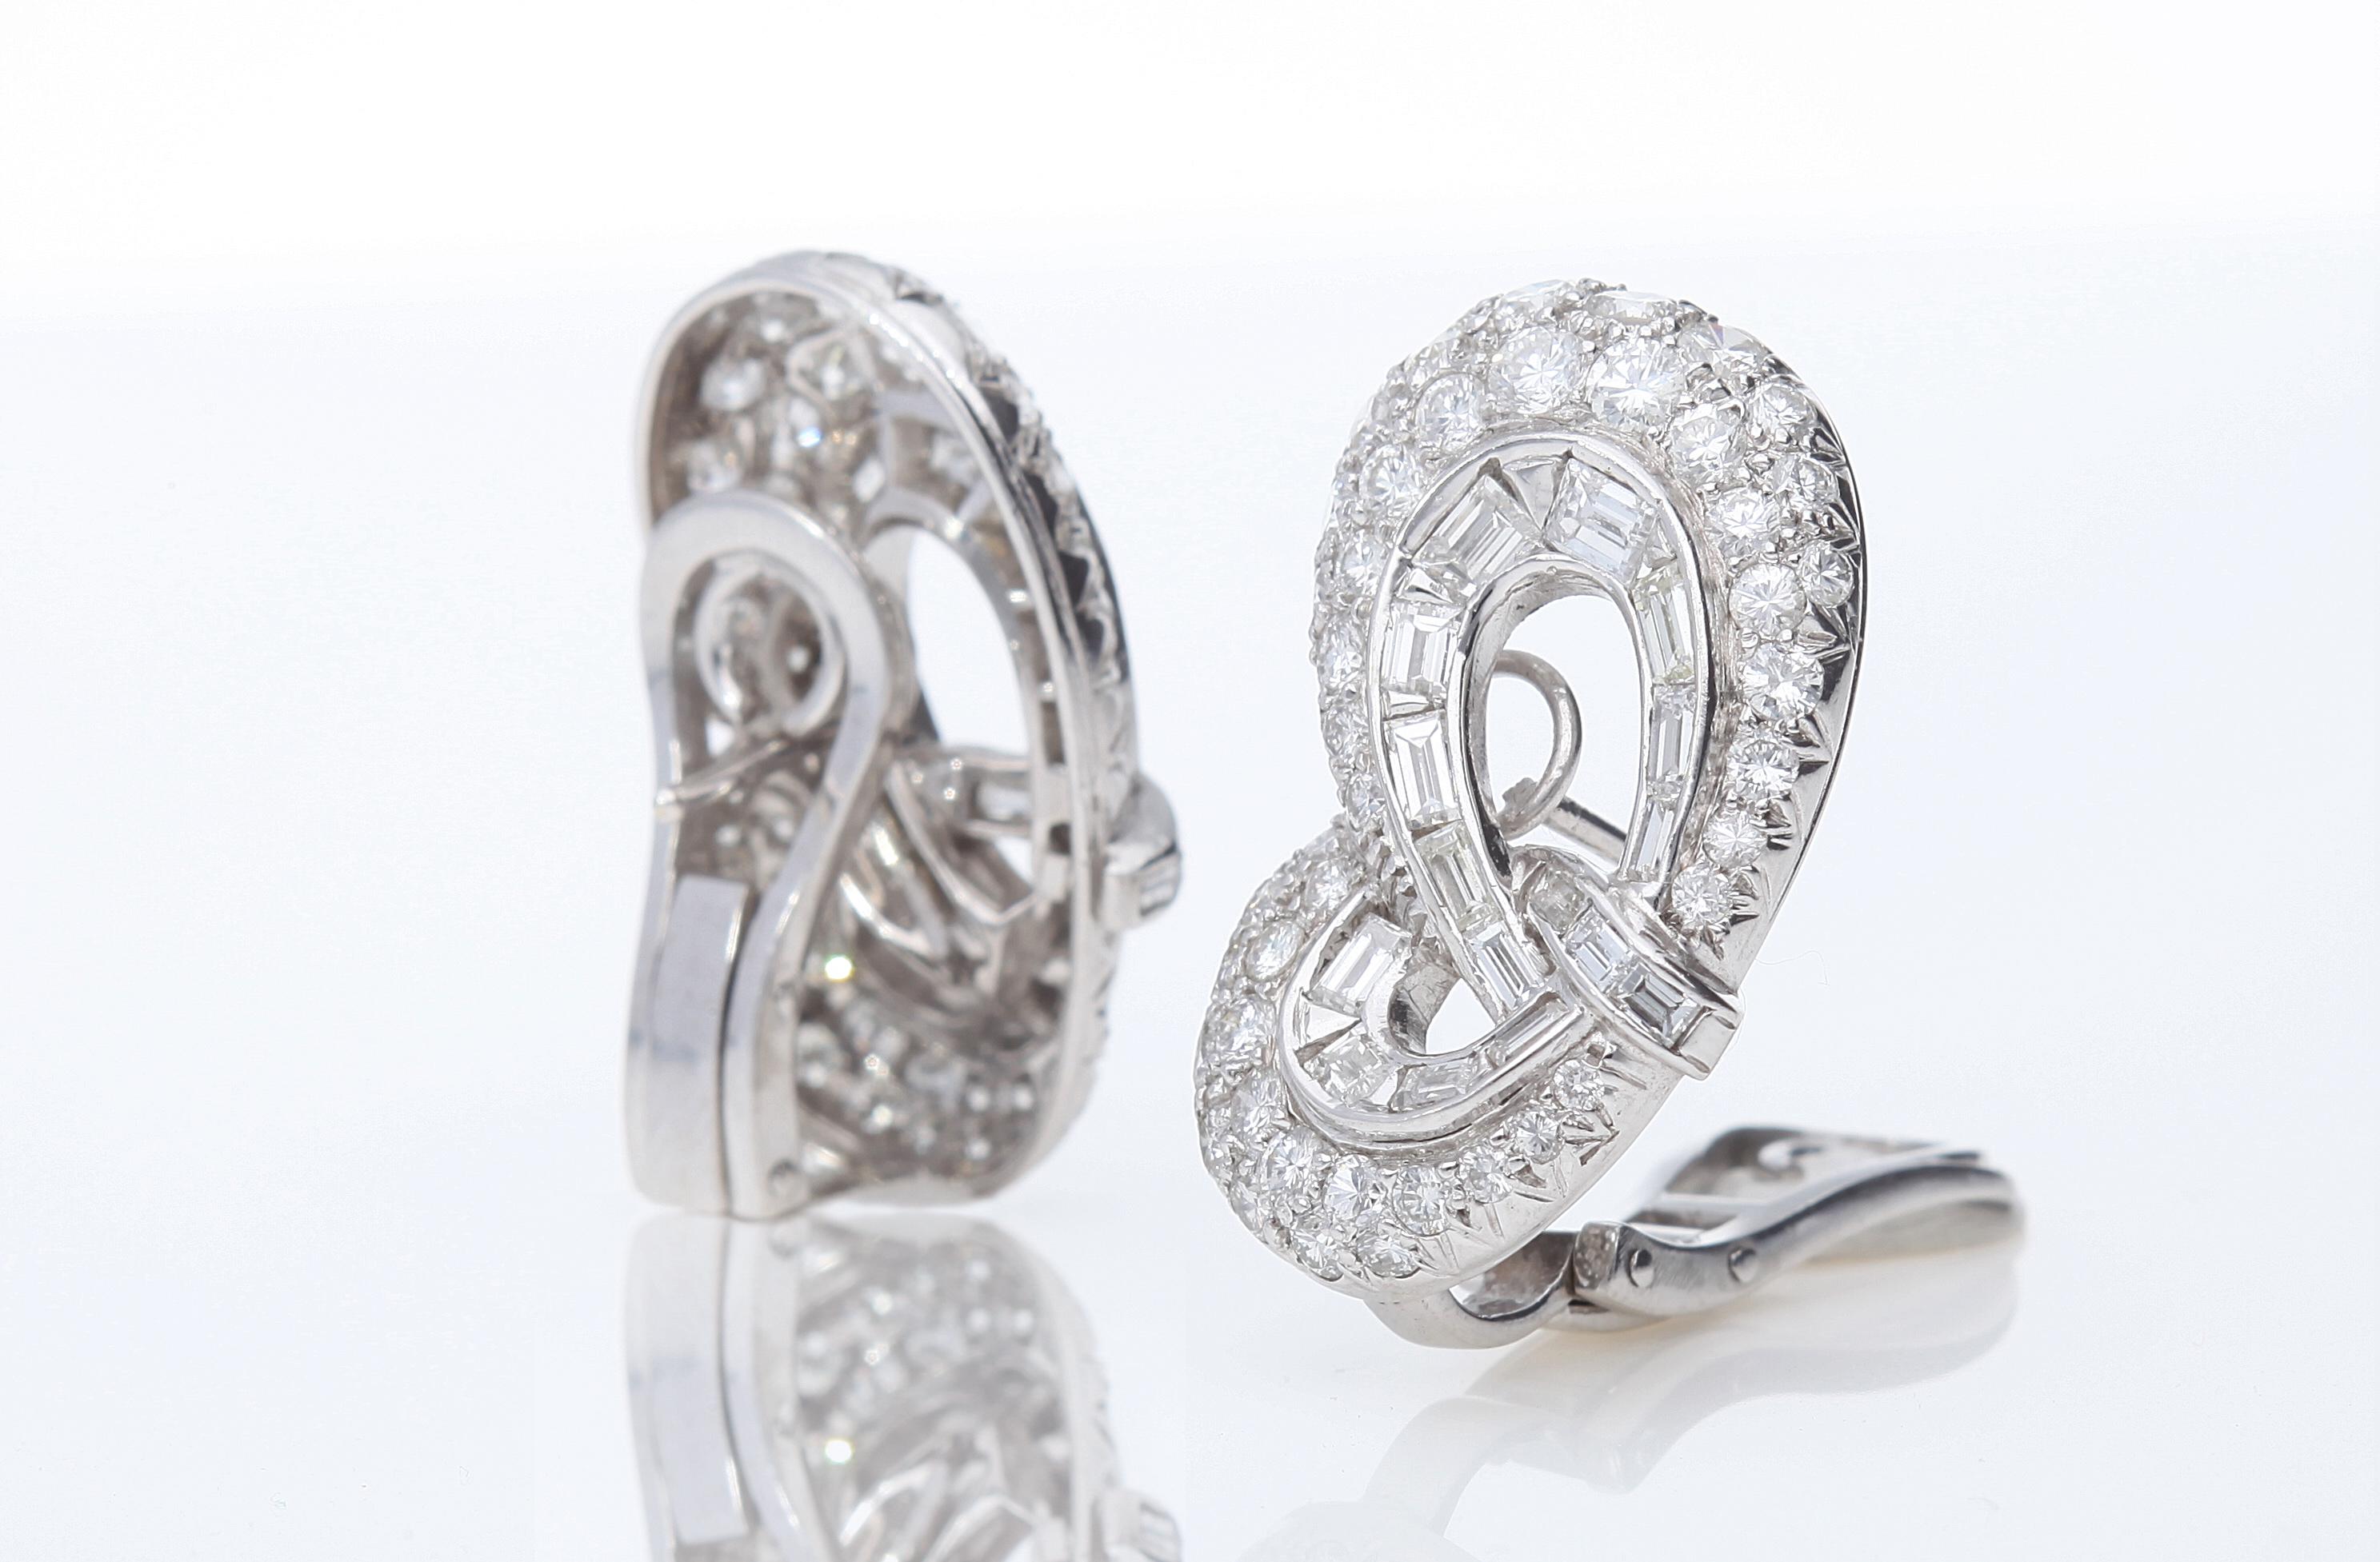 Art Nouveau Liberty earrings with ct 6.00 of diamonds